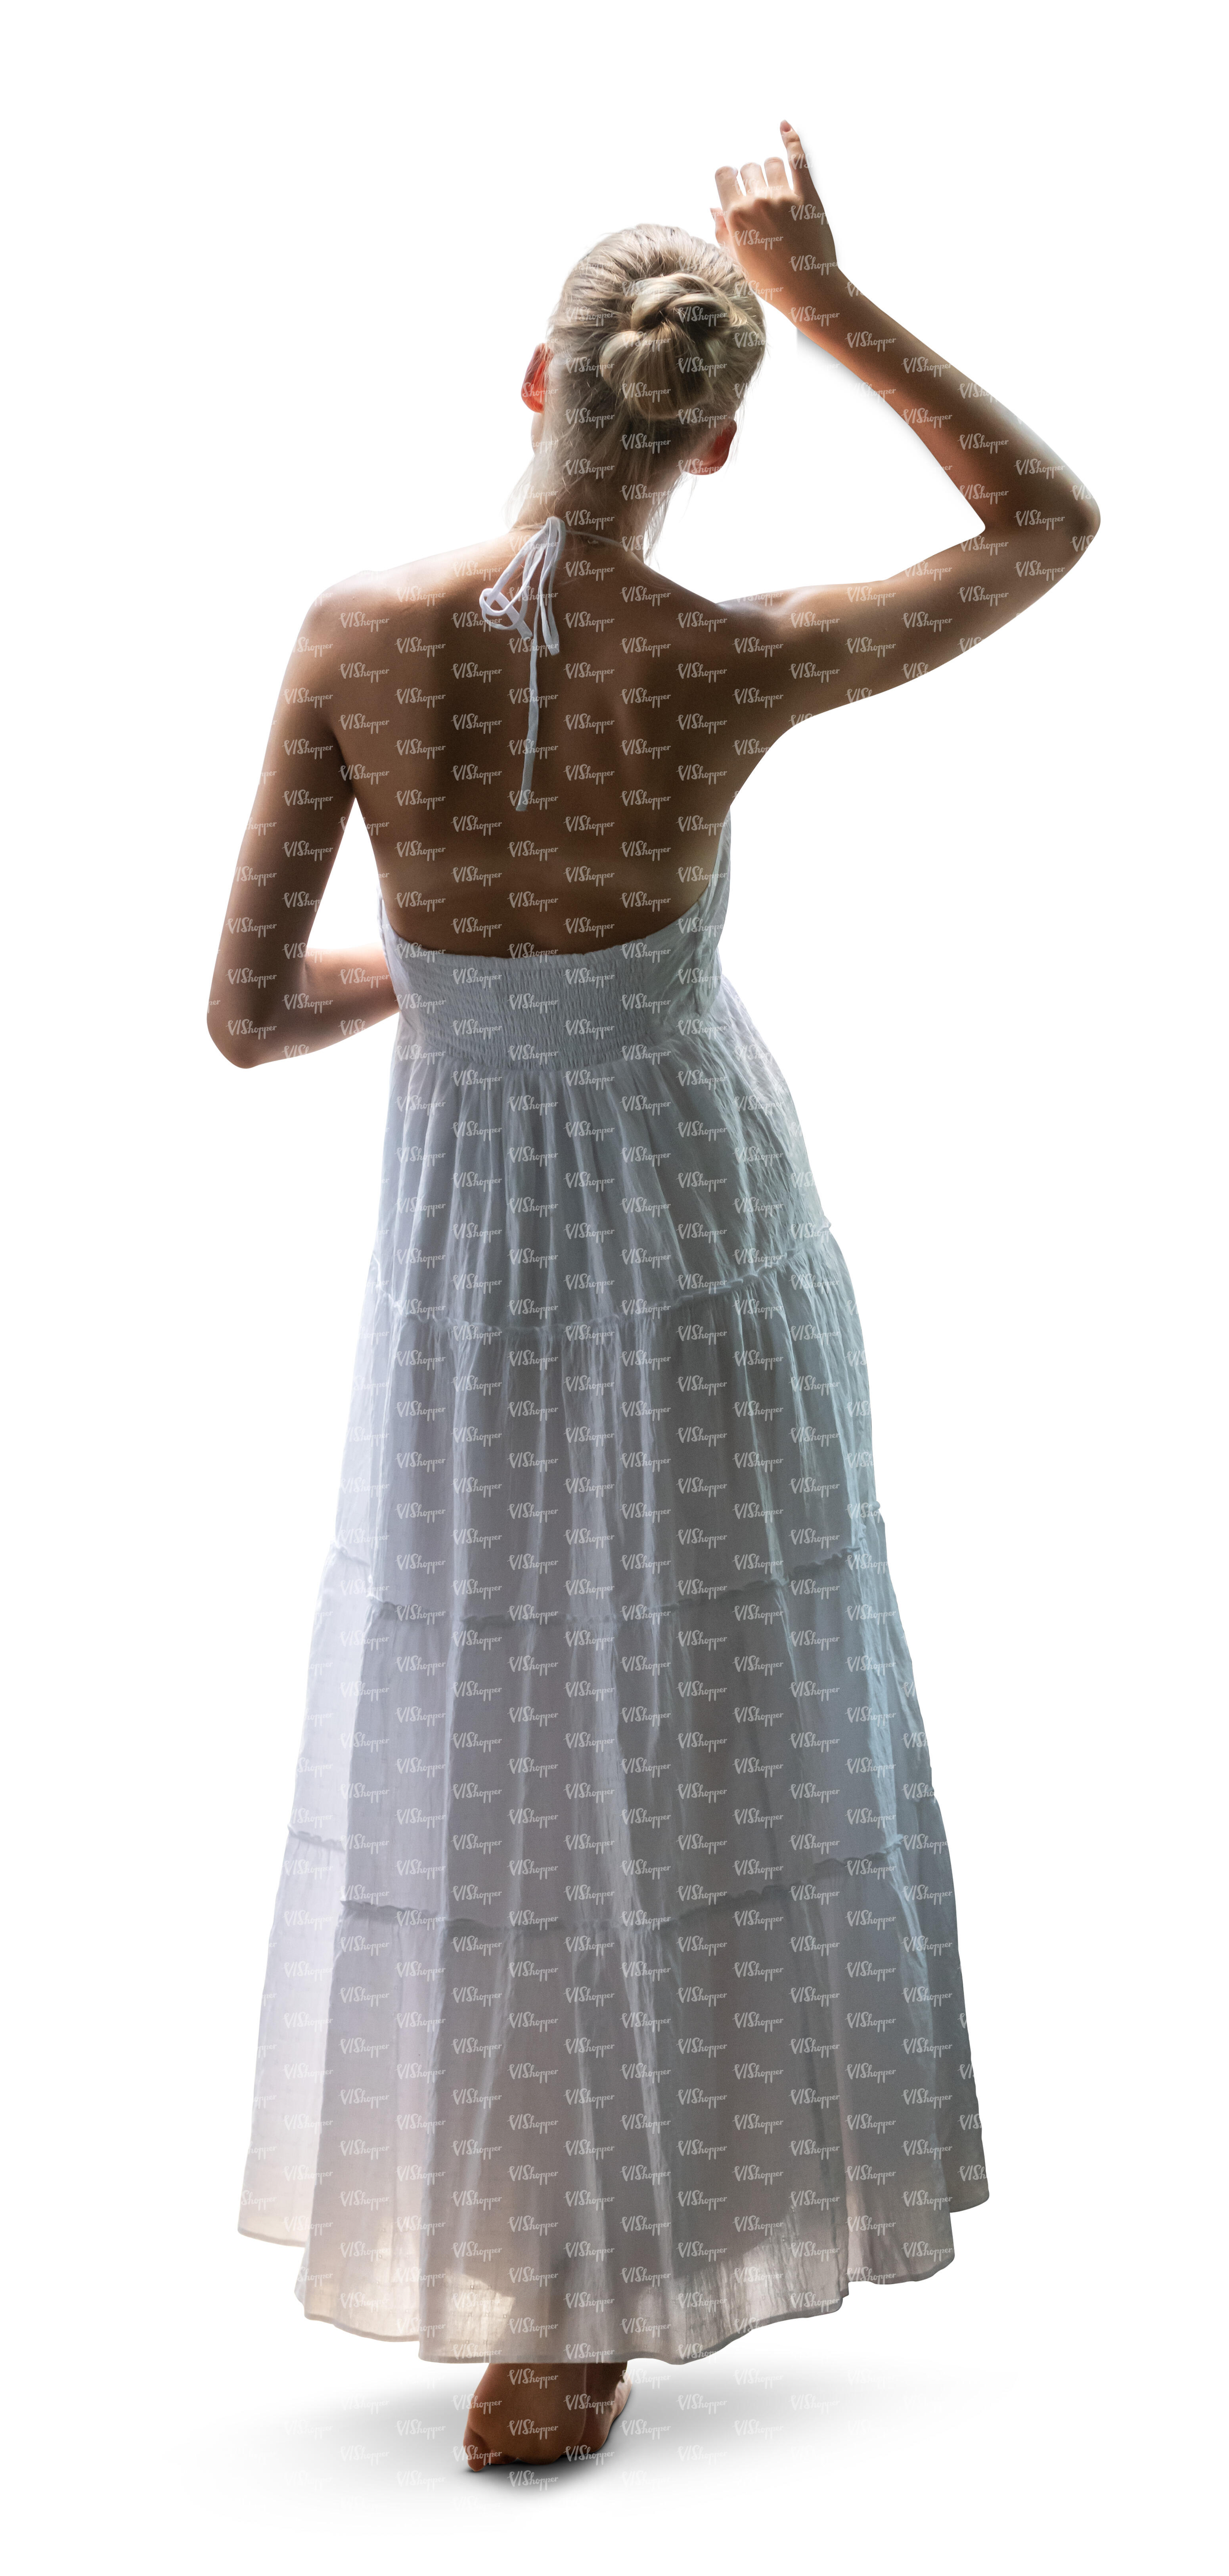 backlit woman in a white dress standing - VIShopper